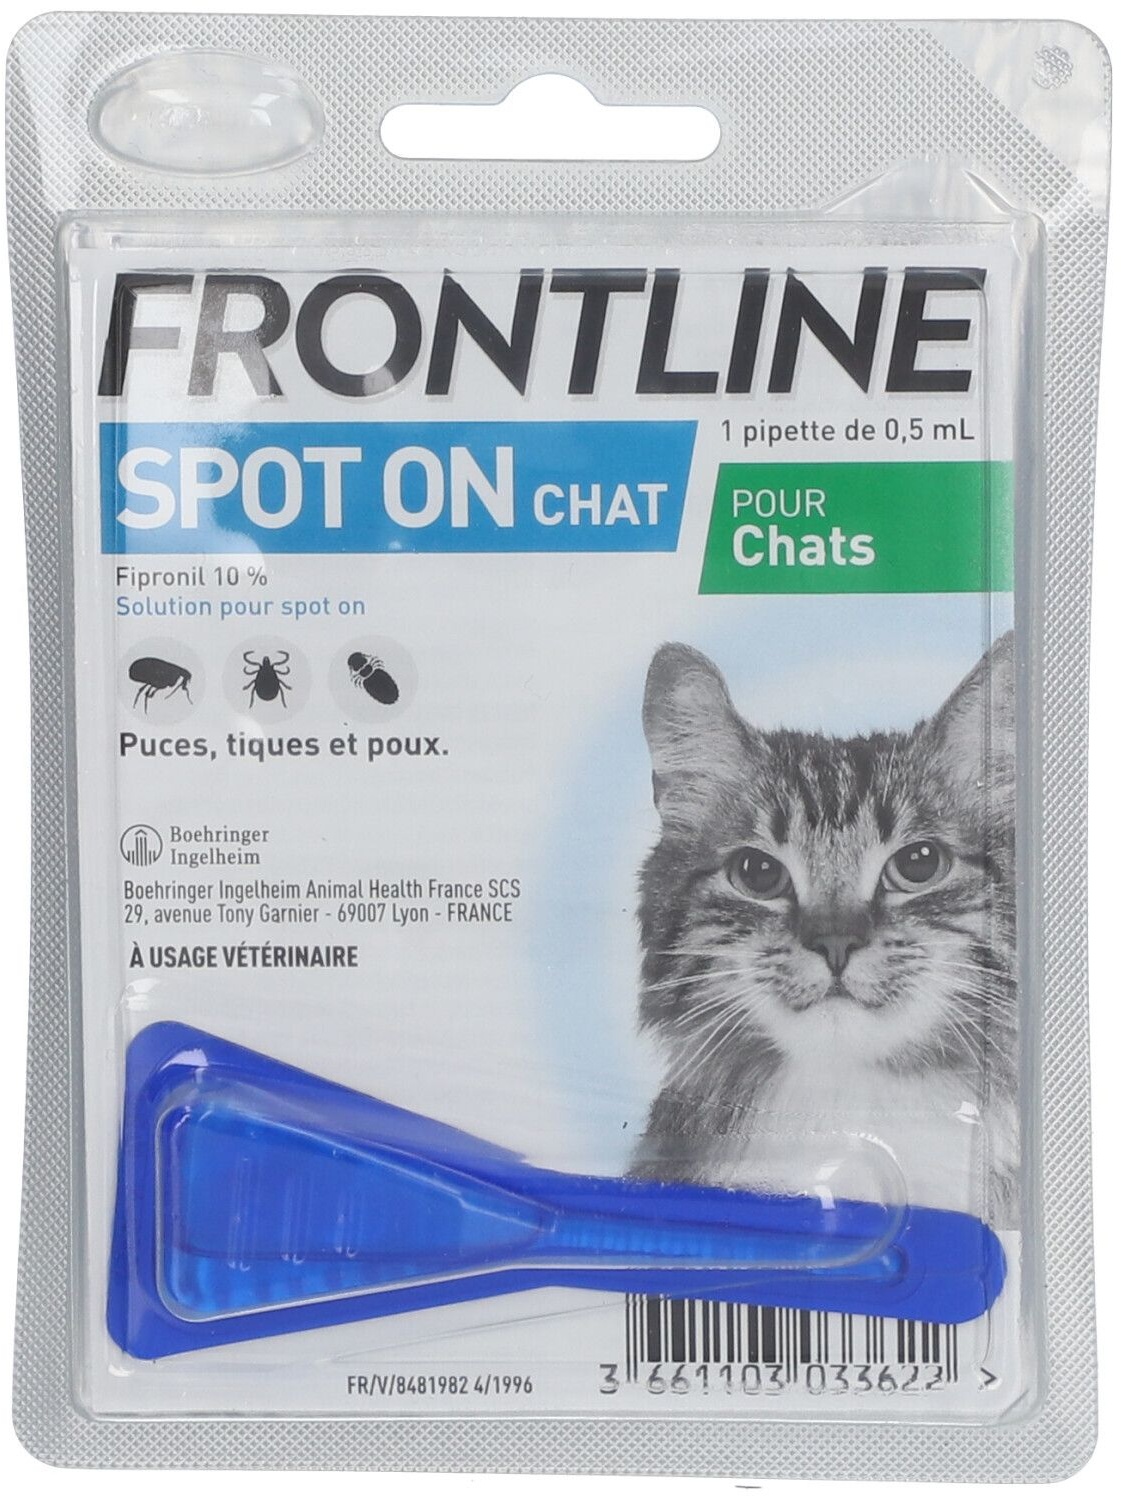 Frontline® Spot on Chat 1 pc(s) pipette(s) unidose(s)